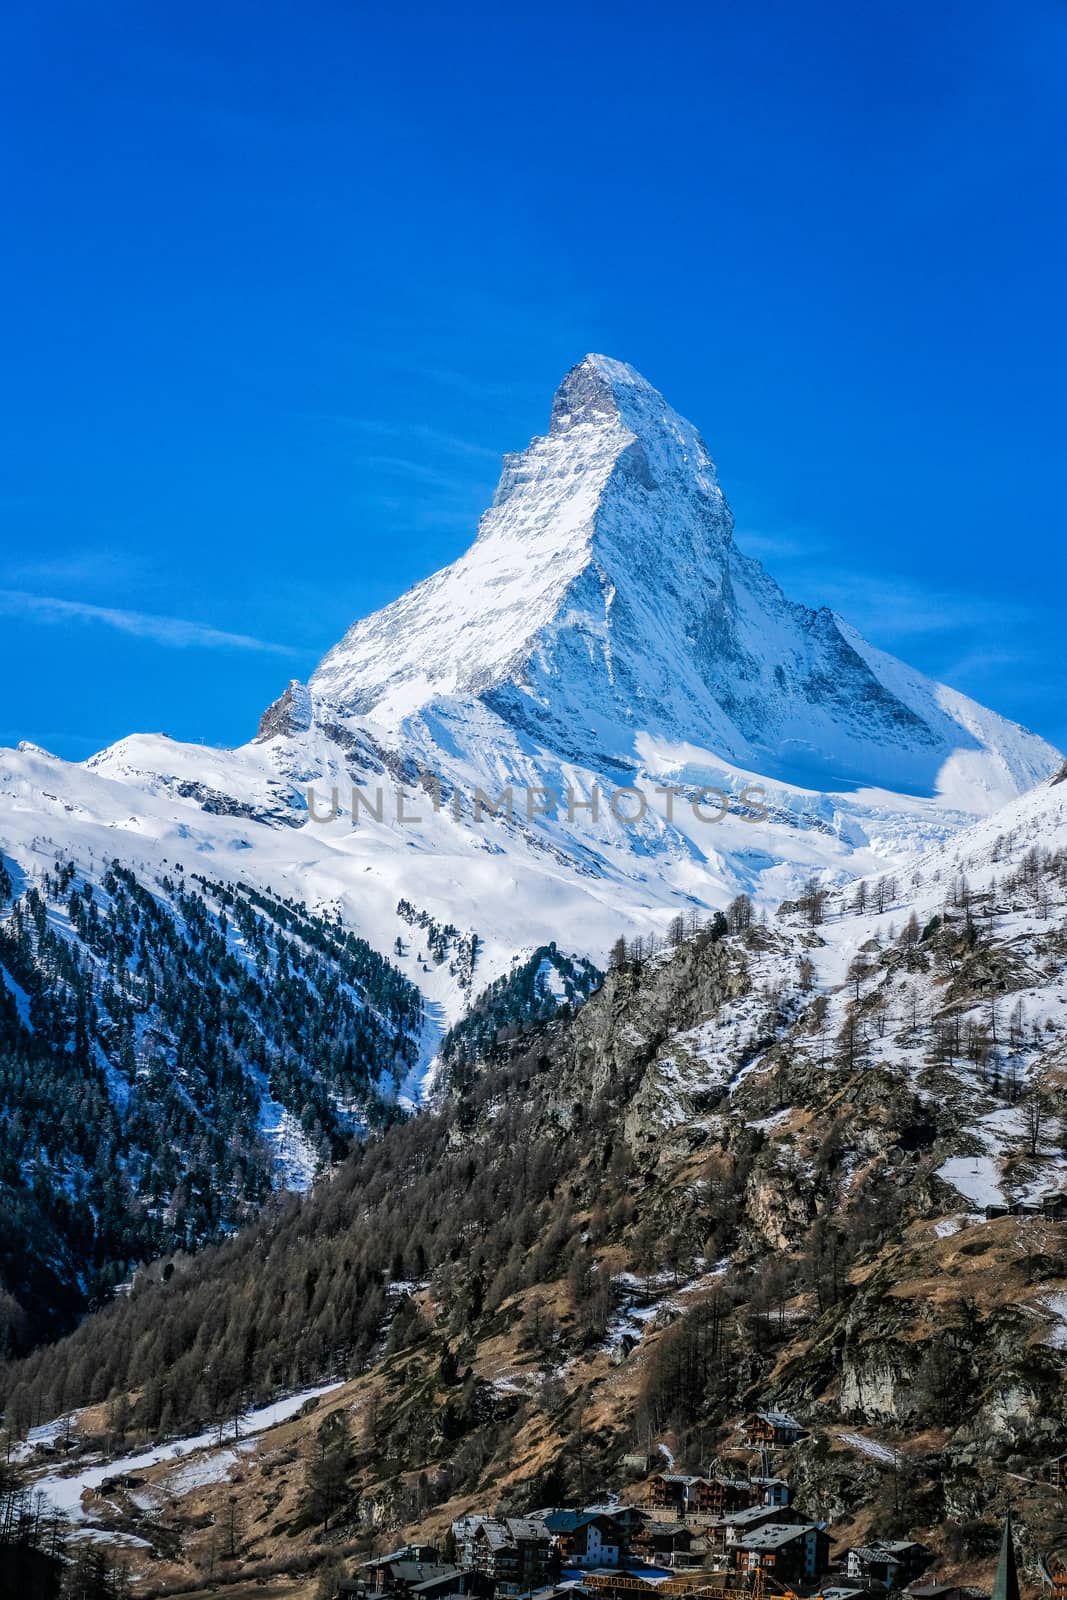 Beautiful view of old village with Matterhorn peak background in by Surasak